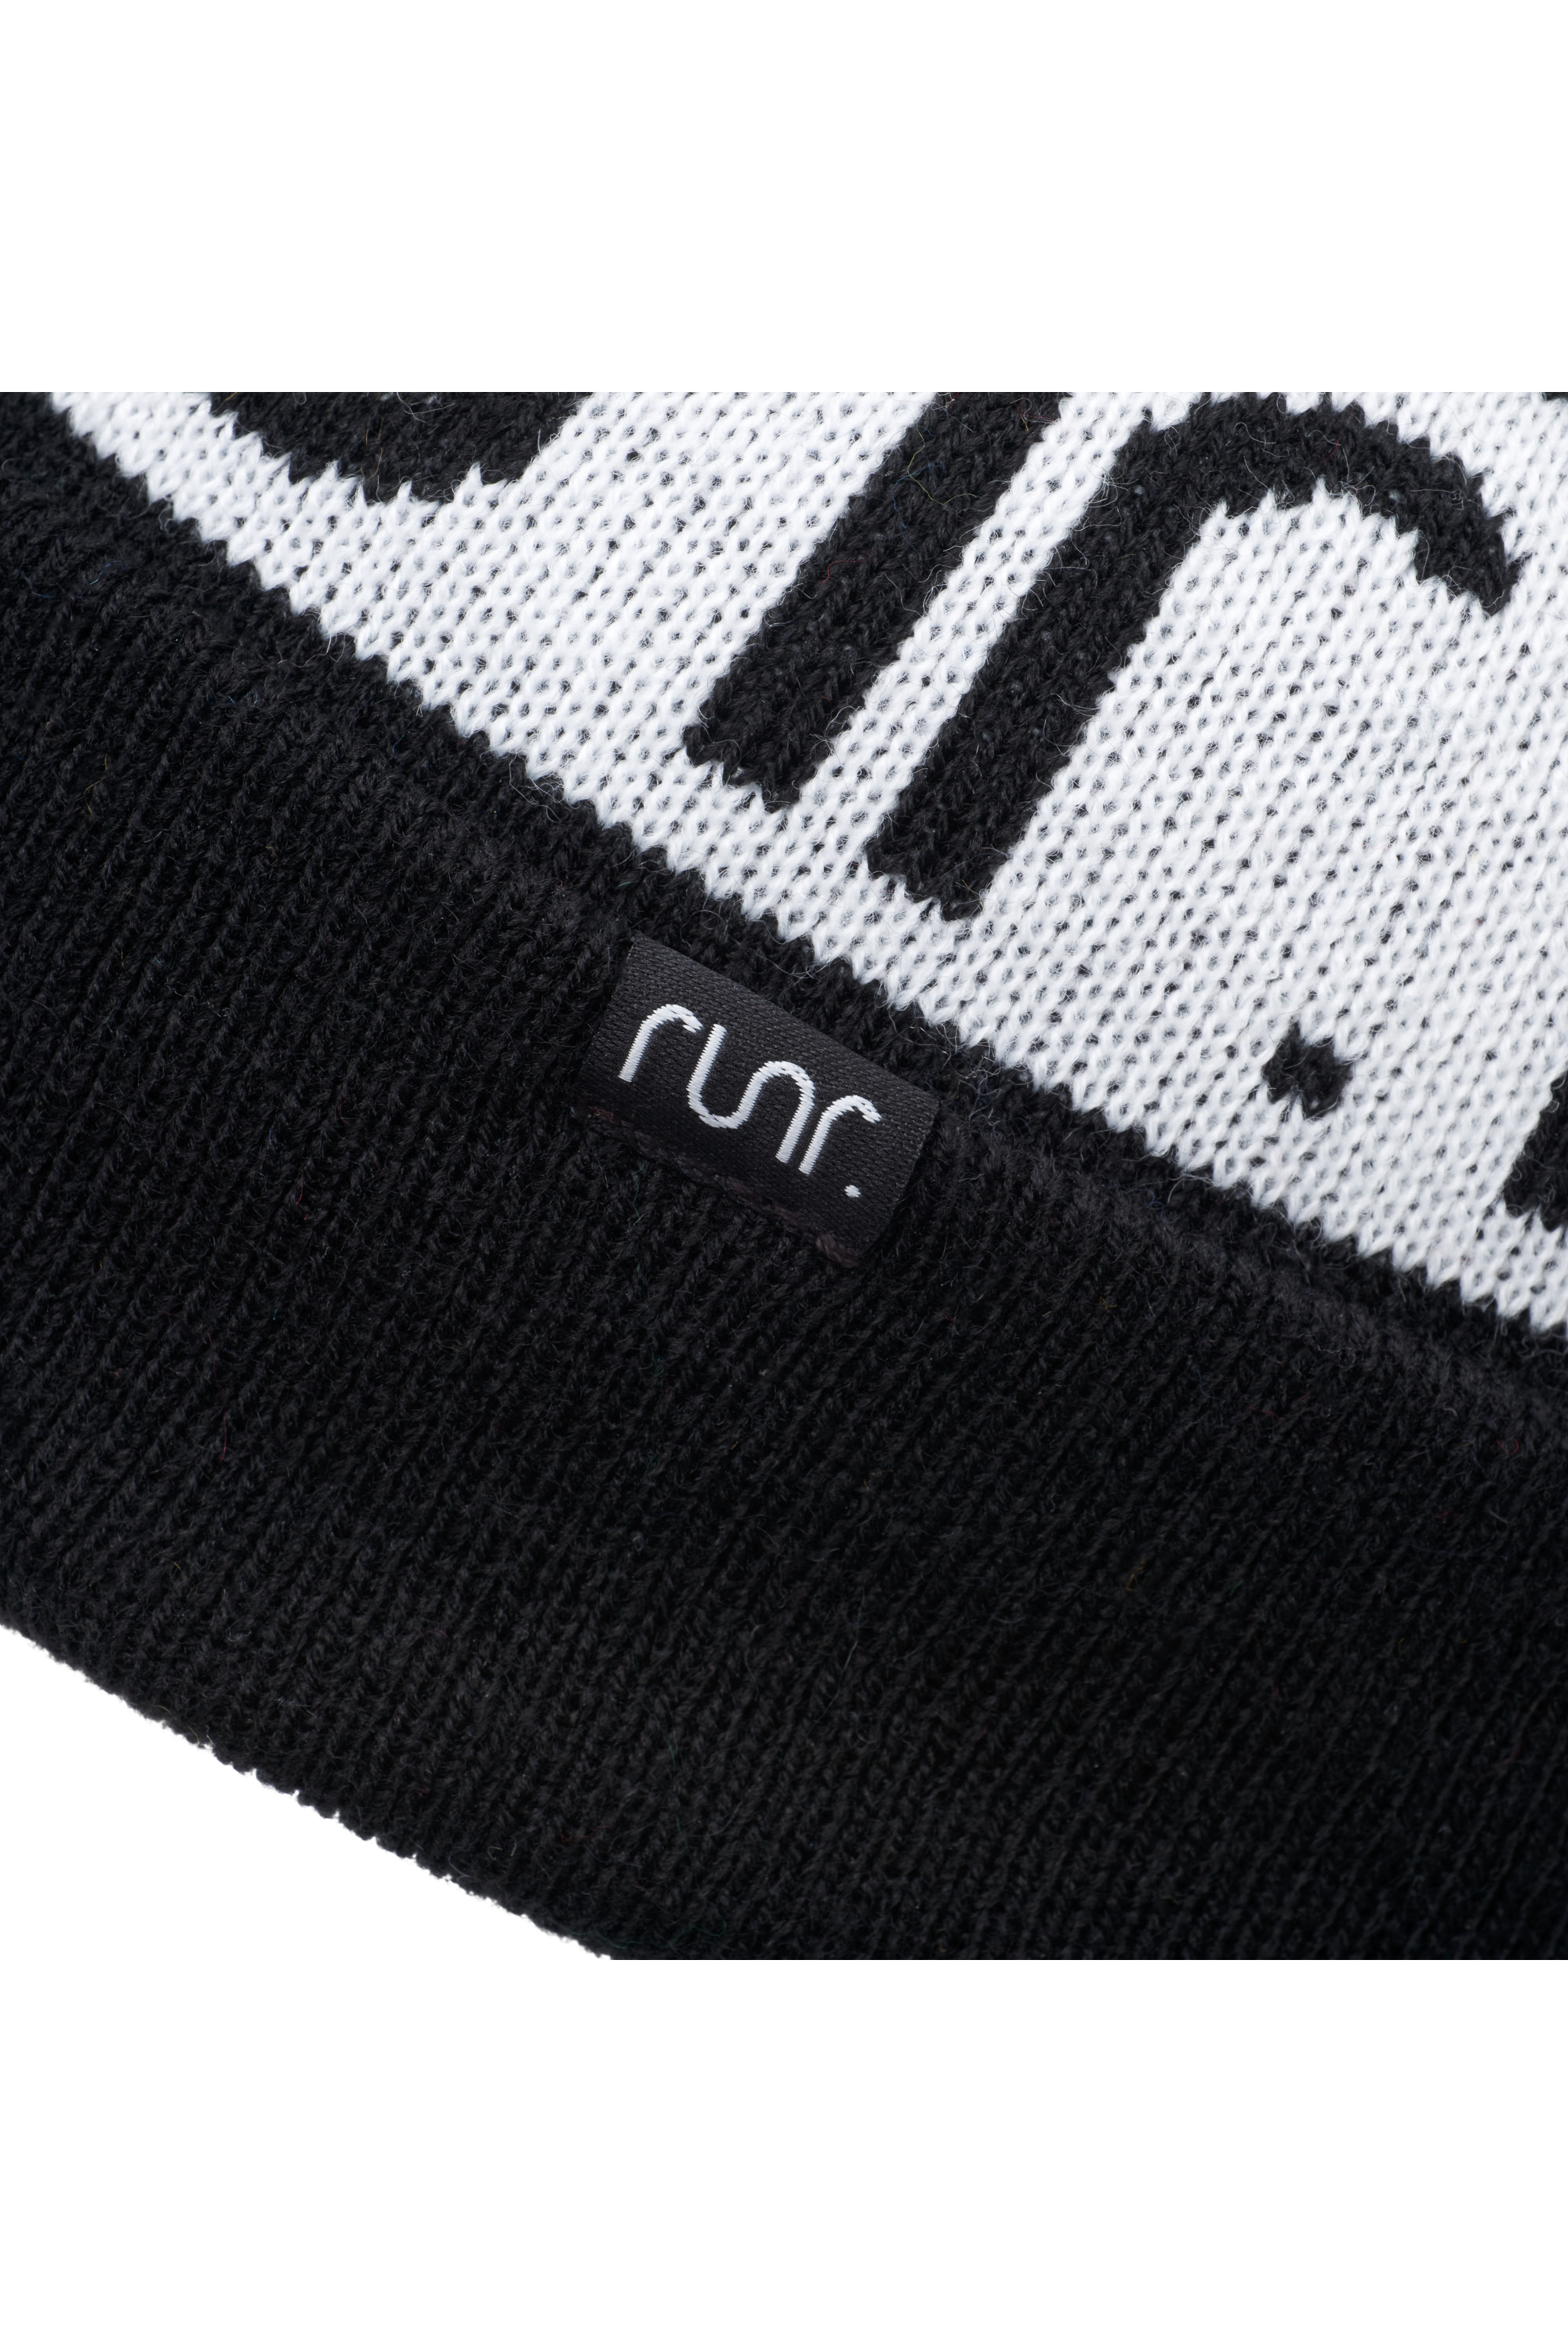 Runr Nordic Bobble Hat 2 pack - Navy + Black & White Bundle